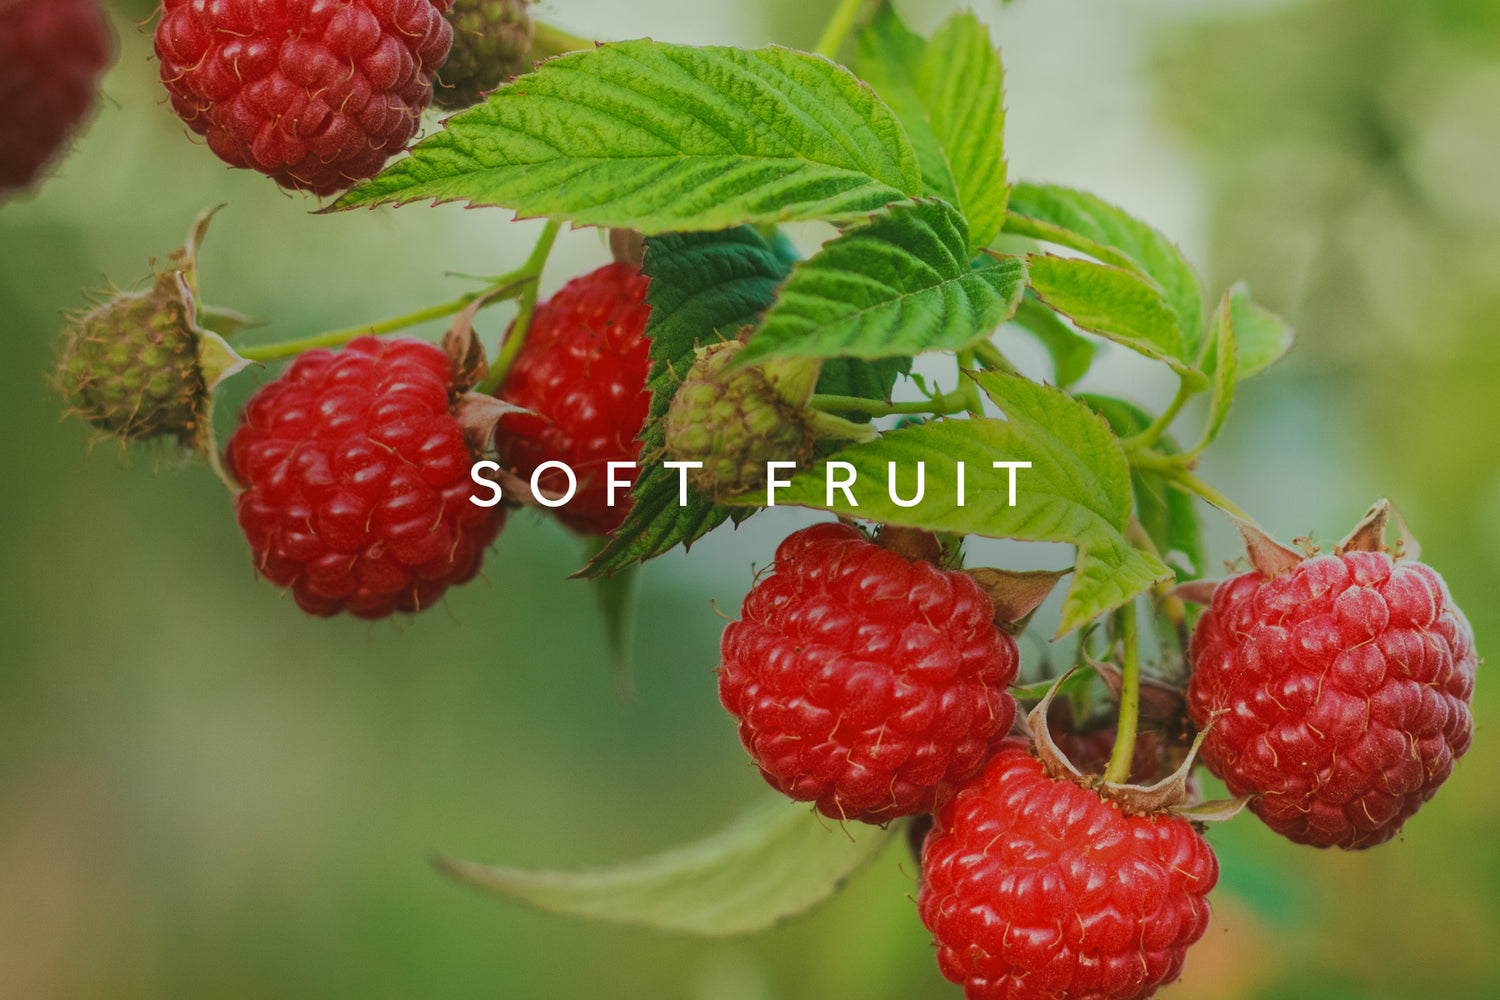 Soft fruit